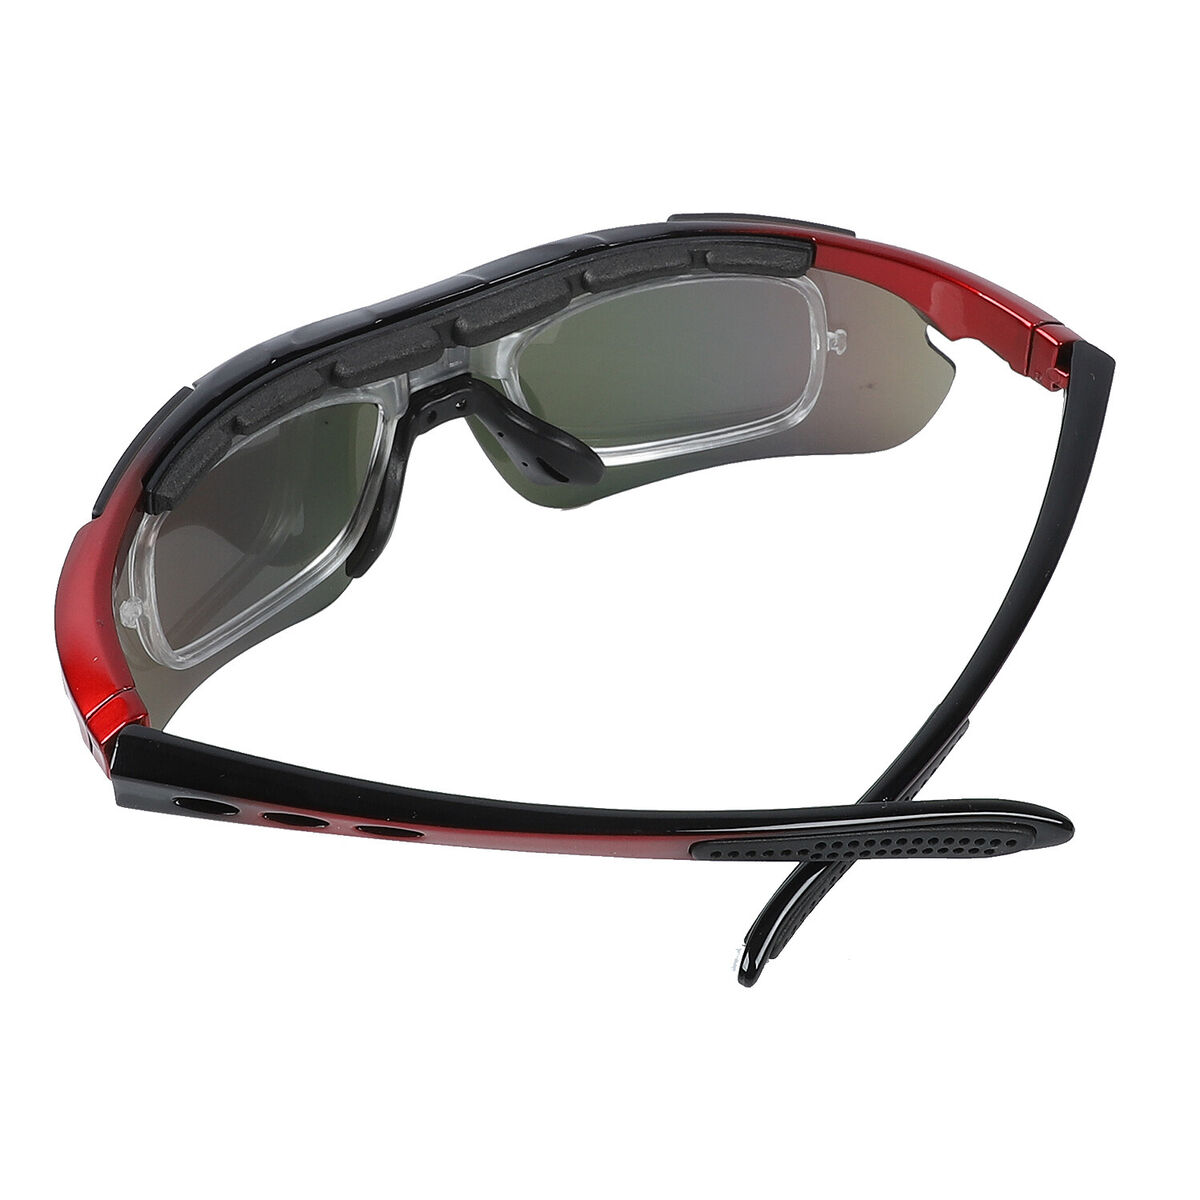 WEST BIKING Polarized Cycling Sunglasses Sports Fishing Glasses 5